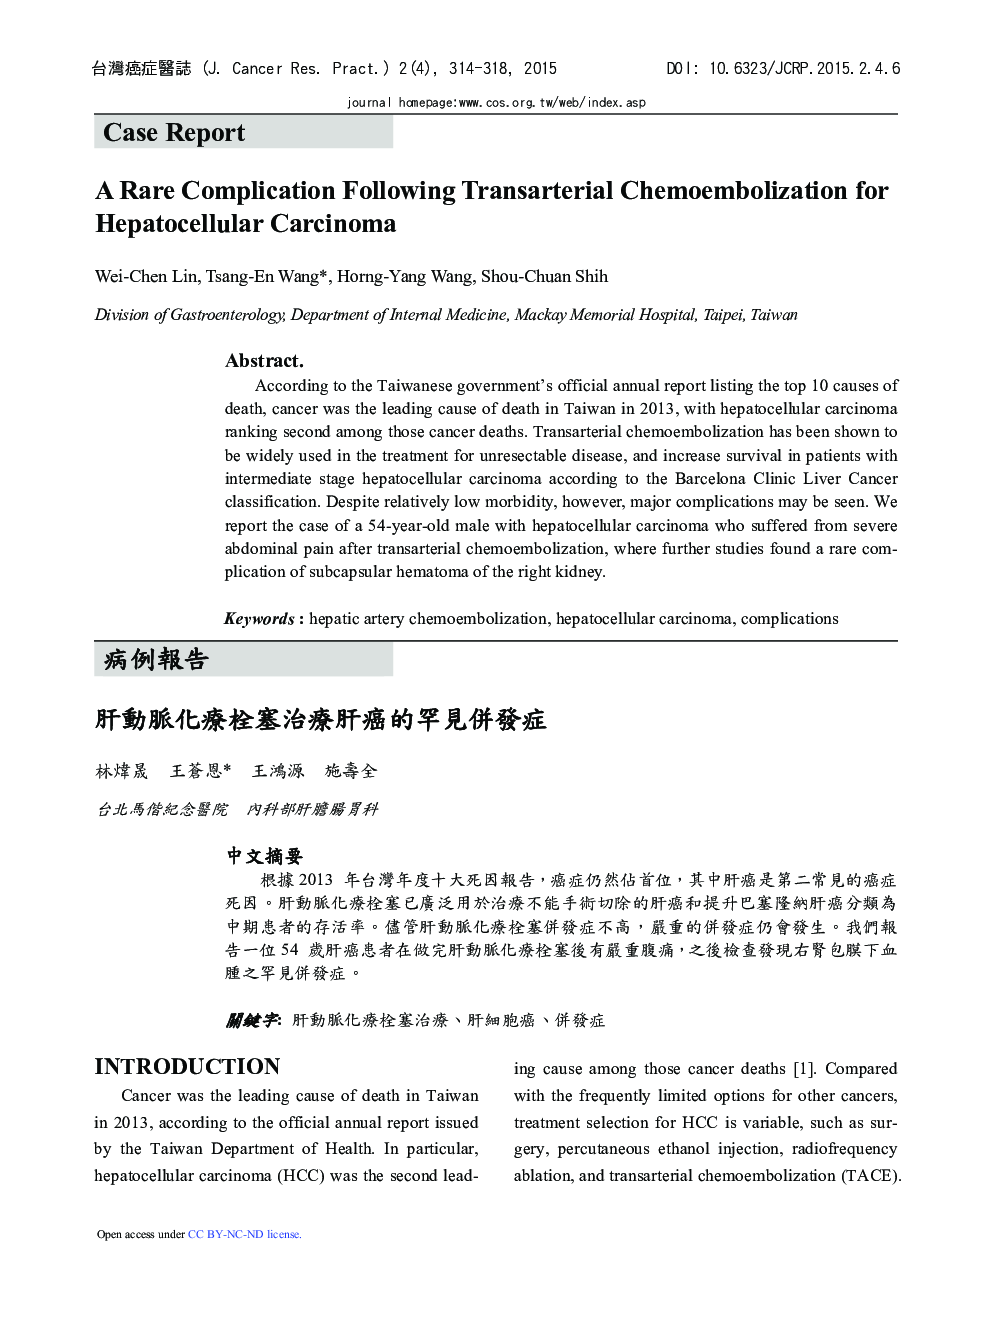 A Rare Complication Following Transarterial Chemoembolization for Hepatocellular Carcinoma